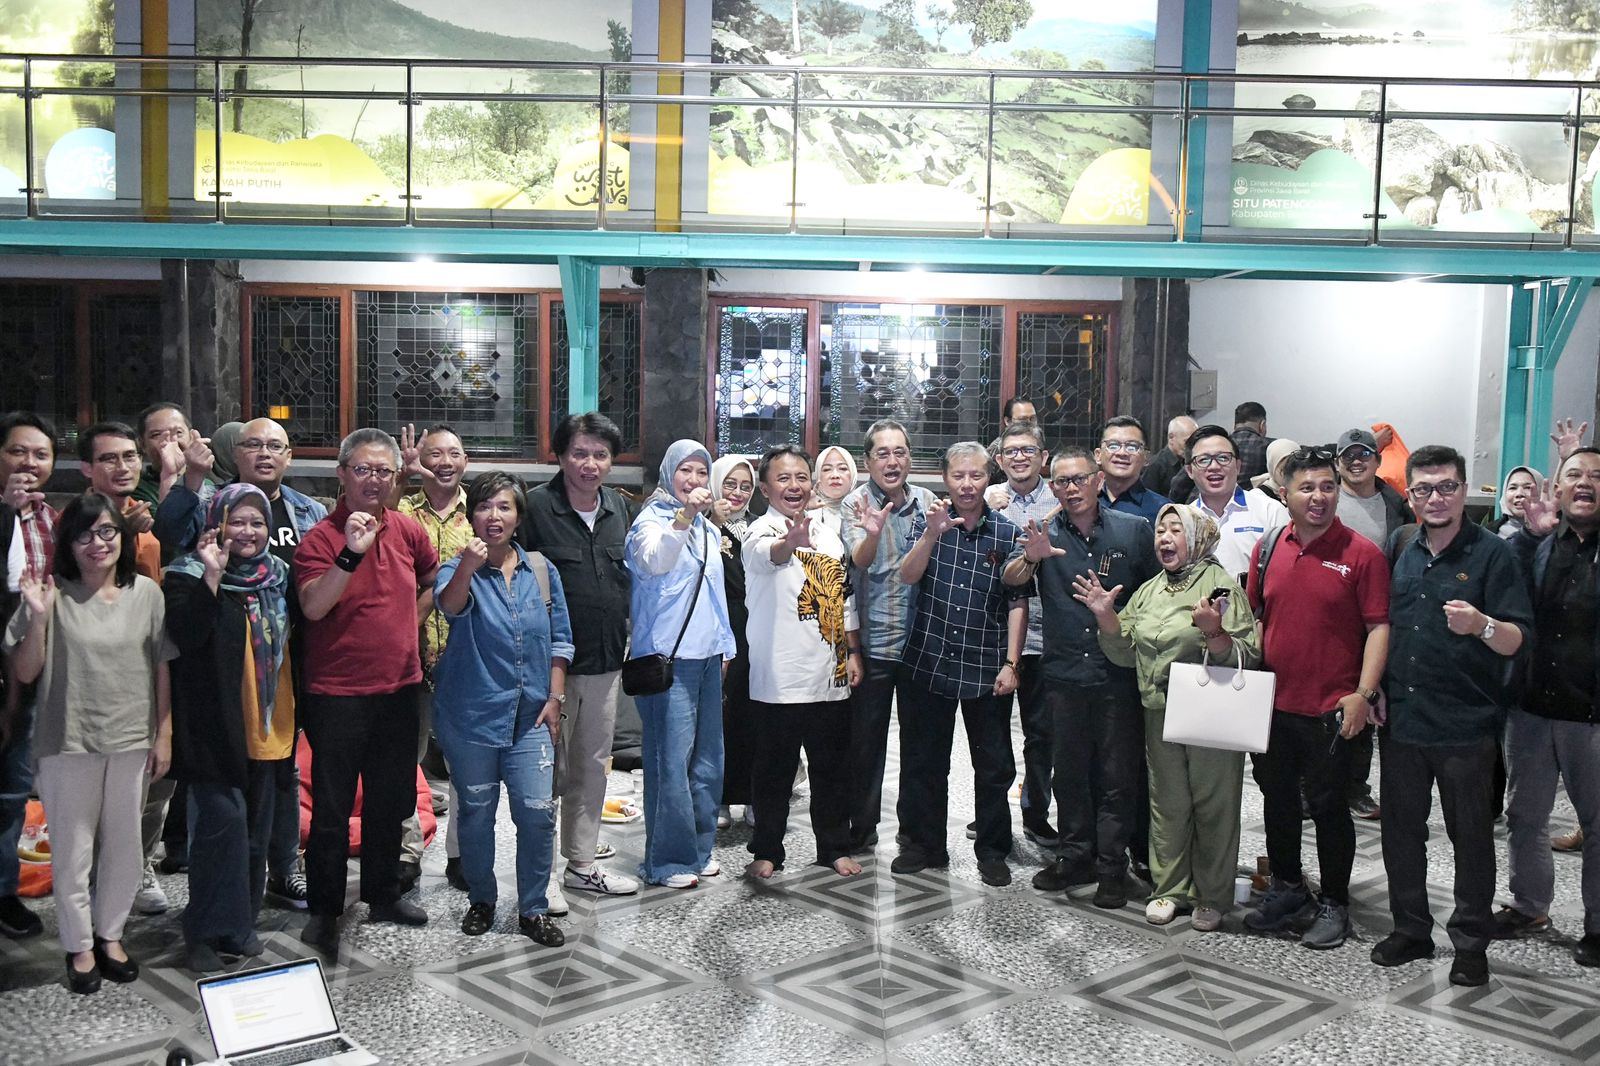 Sekda Herman Suryatman Optimistis Pariwisata Jawa Barat Dapat Tumbuh Progresif